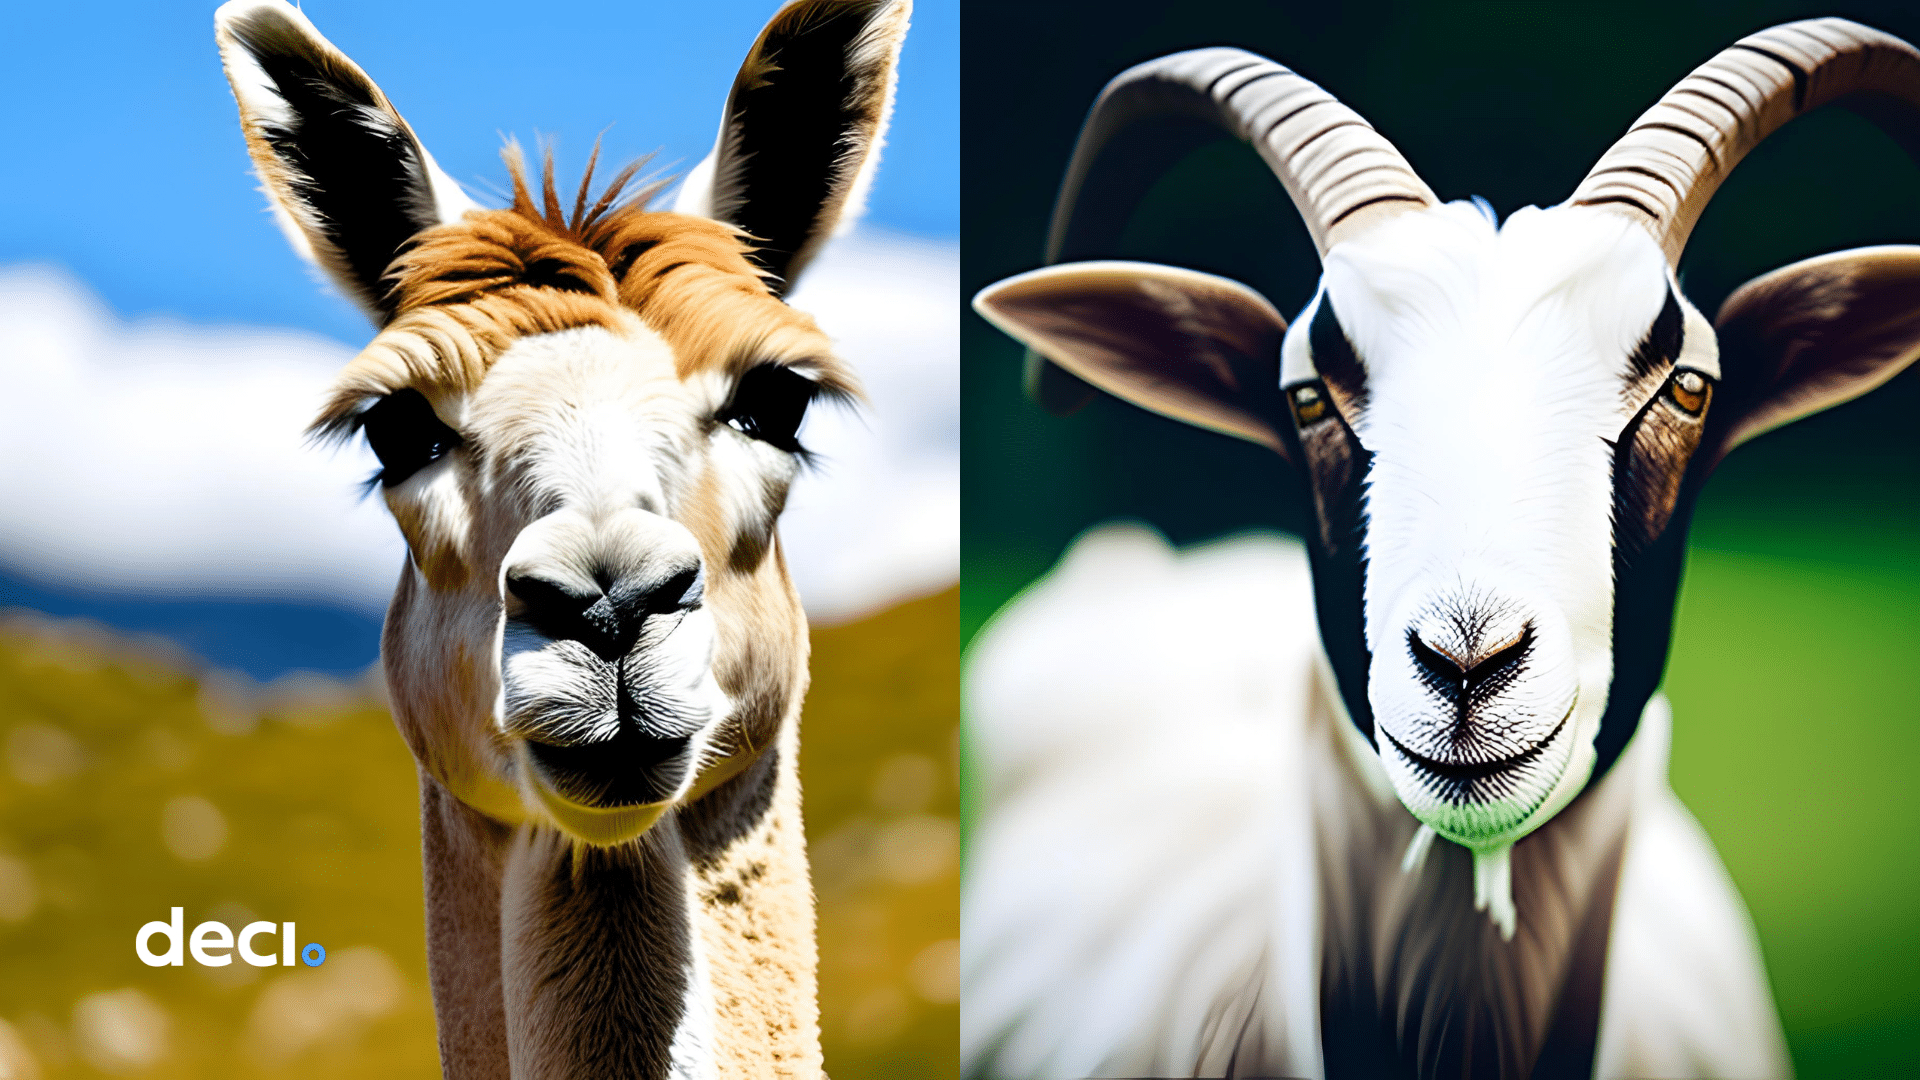 deci-llama-vs-gpt4-featured